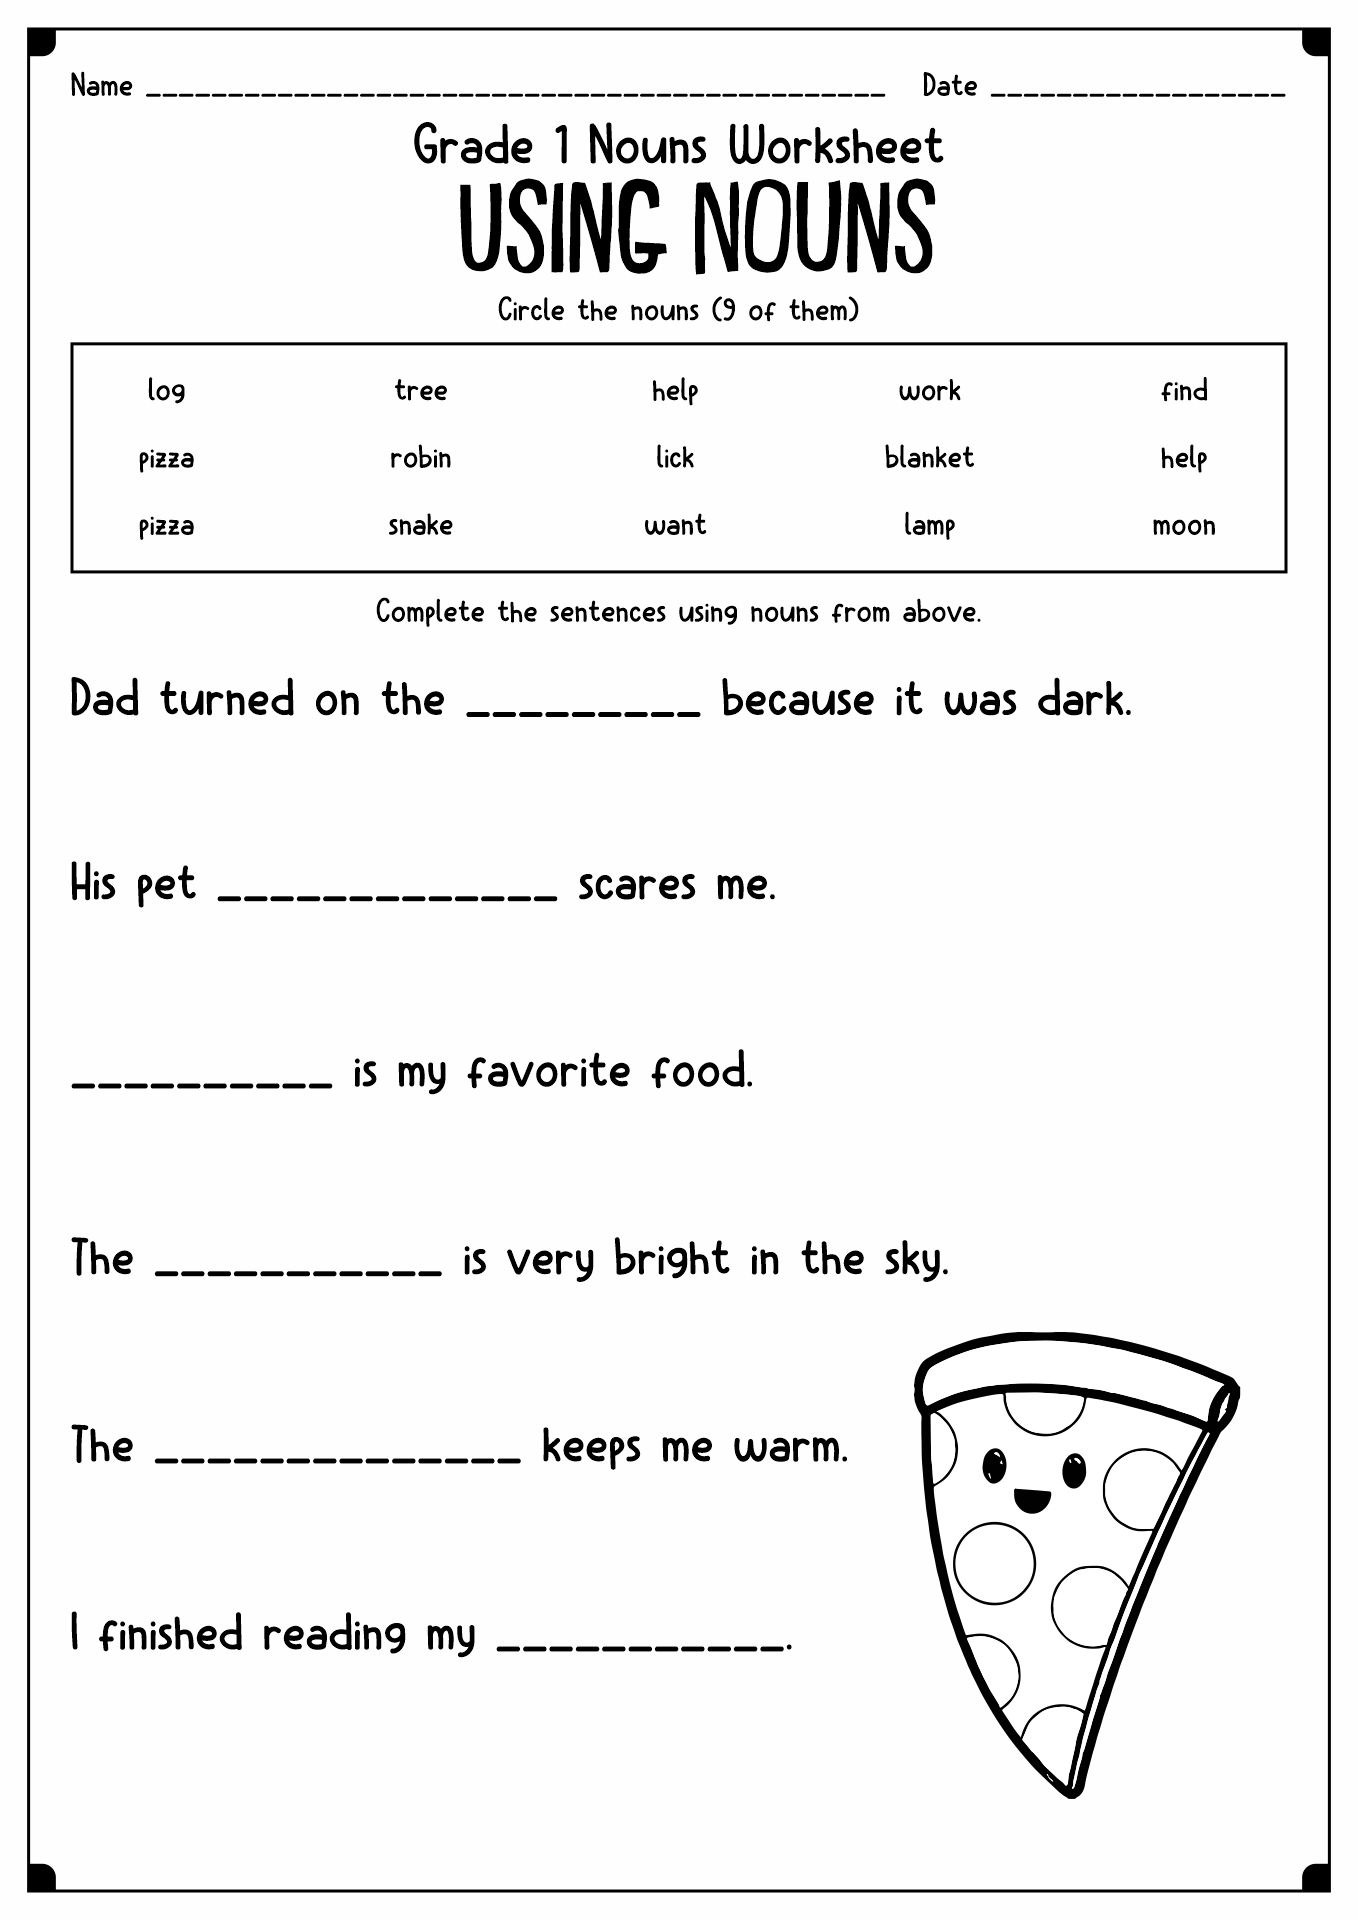 6 easy tips for teaching noun activities in first grade firstieland ...